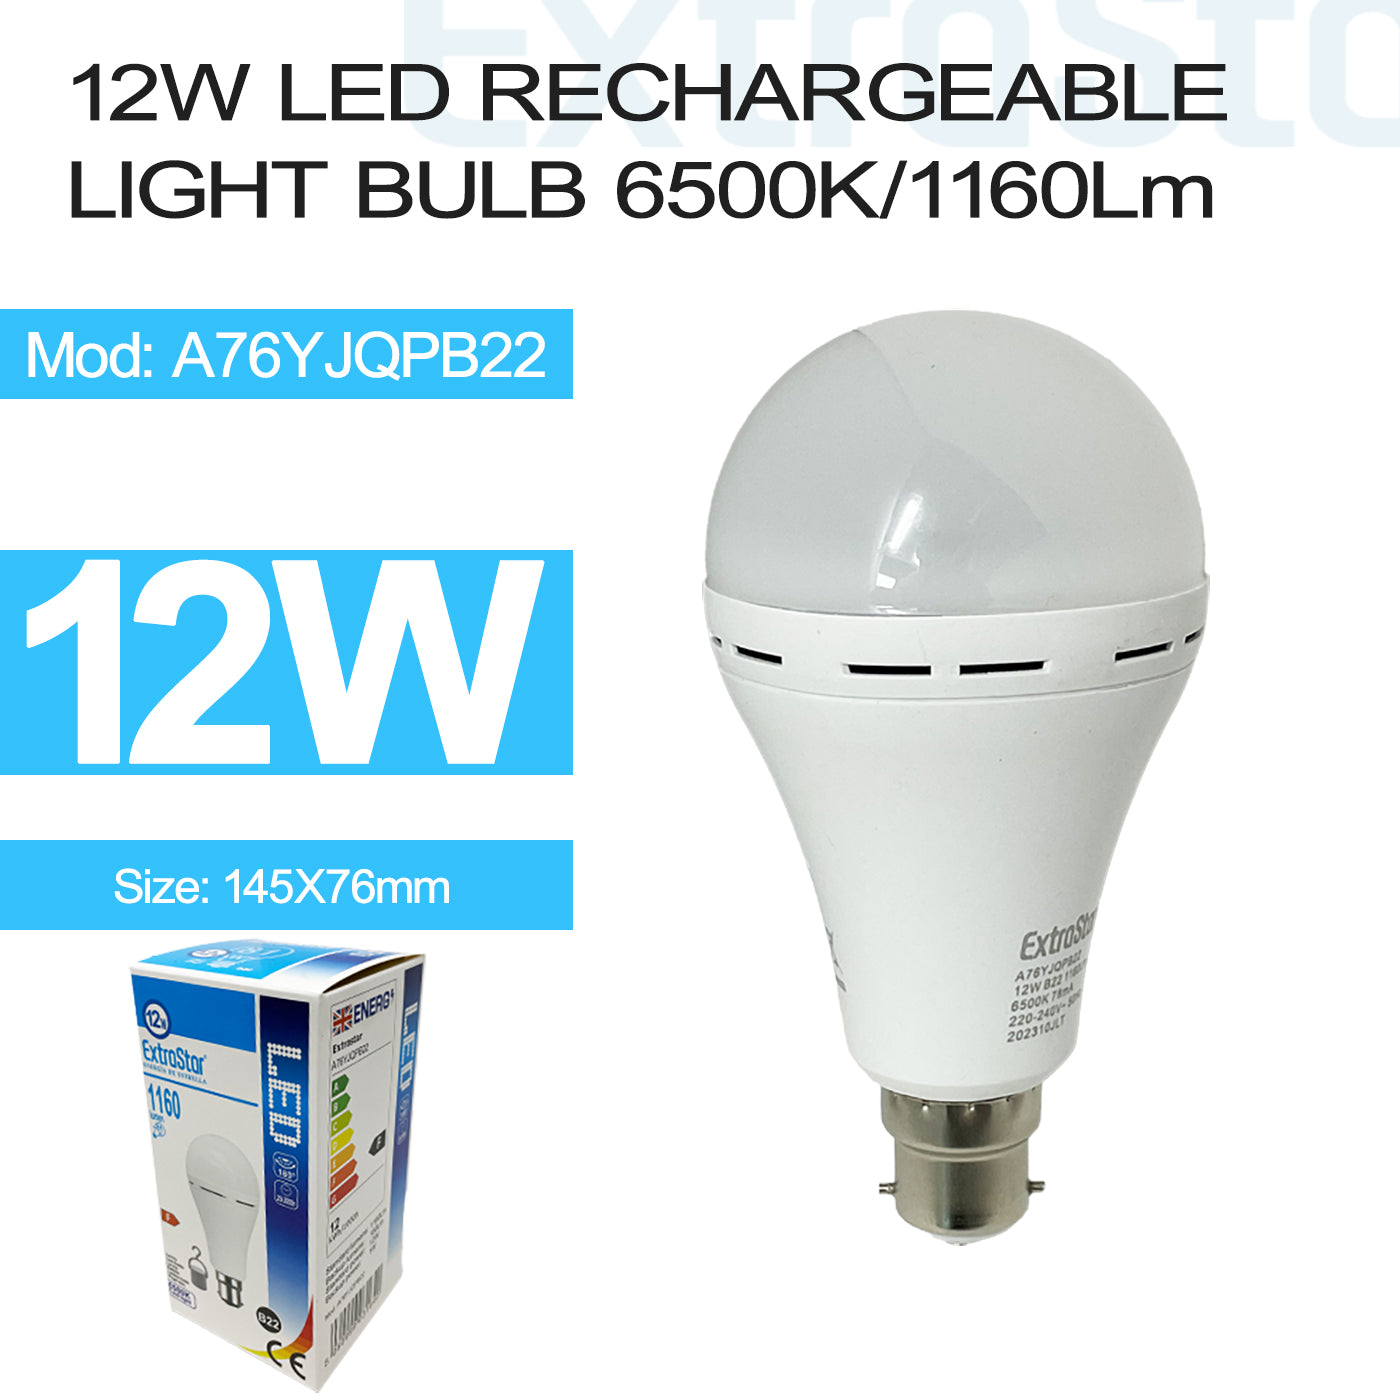 12W LED Rechargeable Light Bulb B22, 6500K (A76YJQPB22)